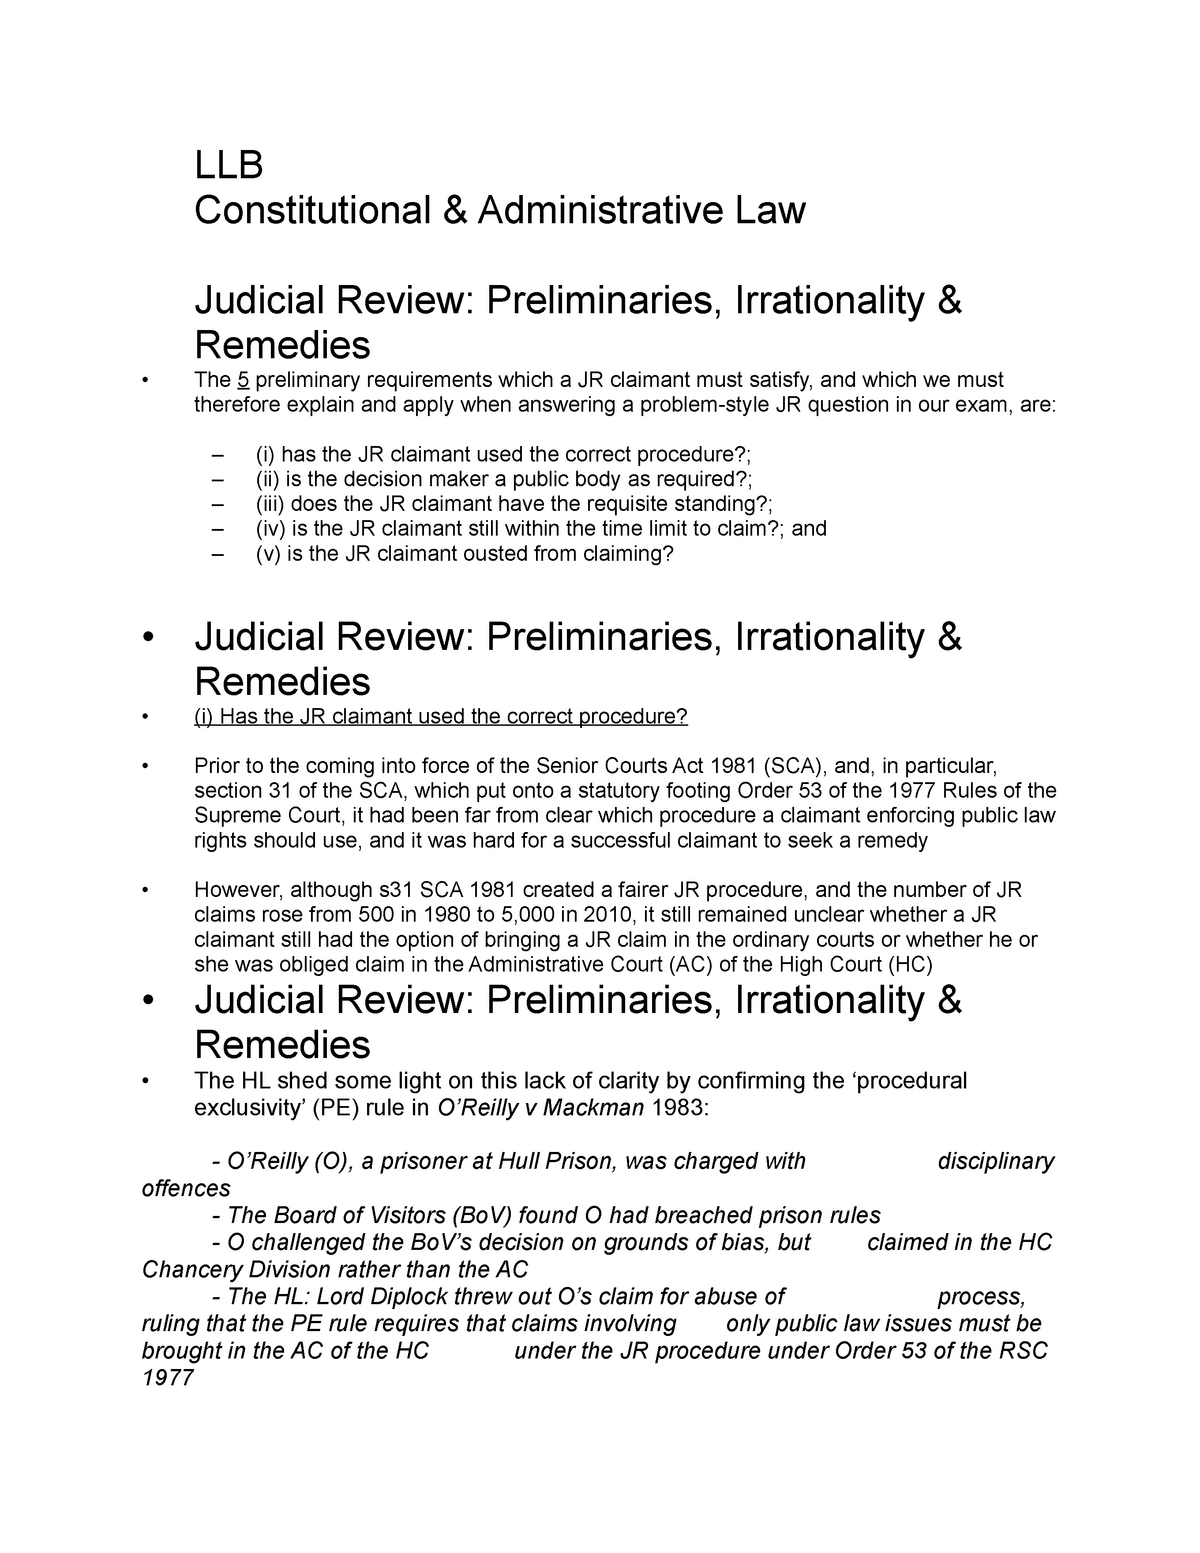 legitimate expectation judicial review essay